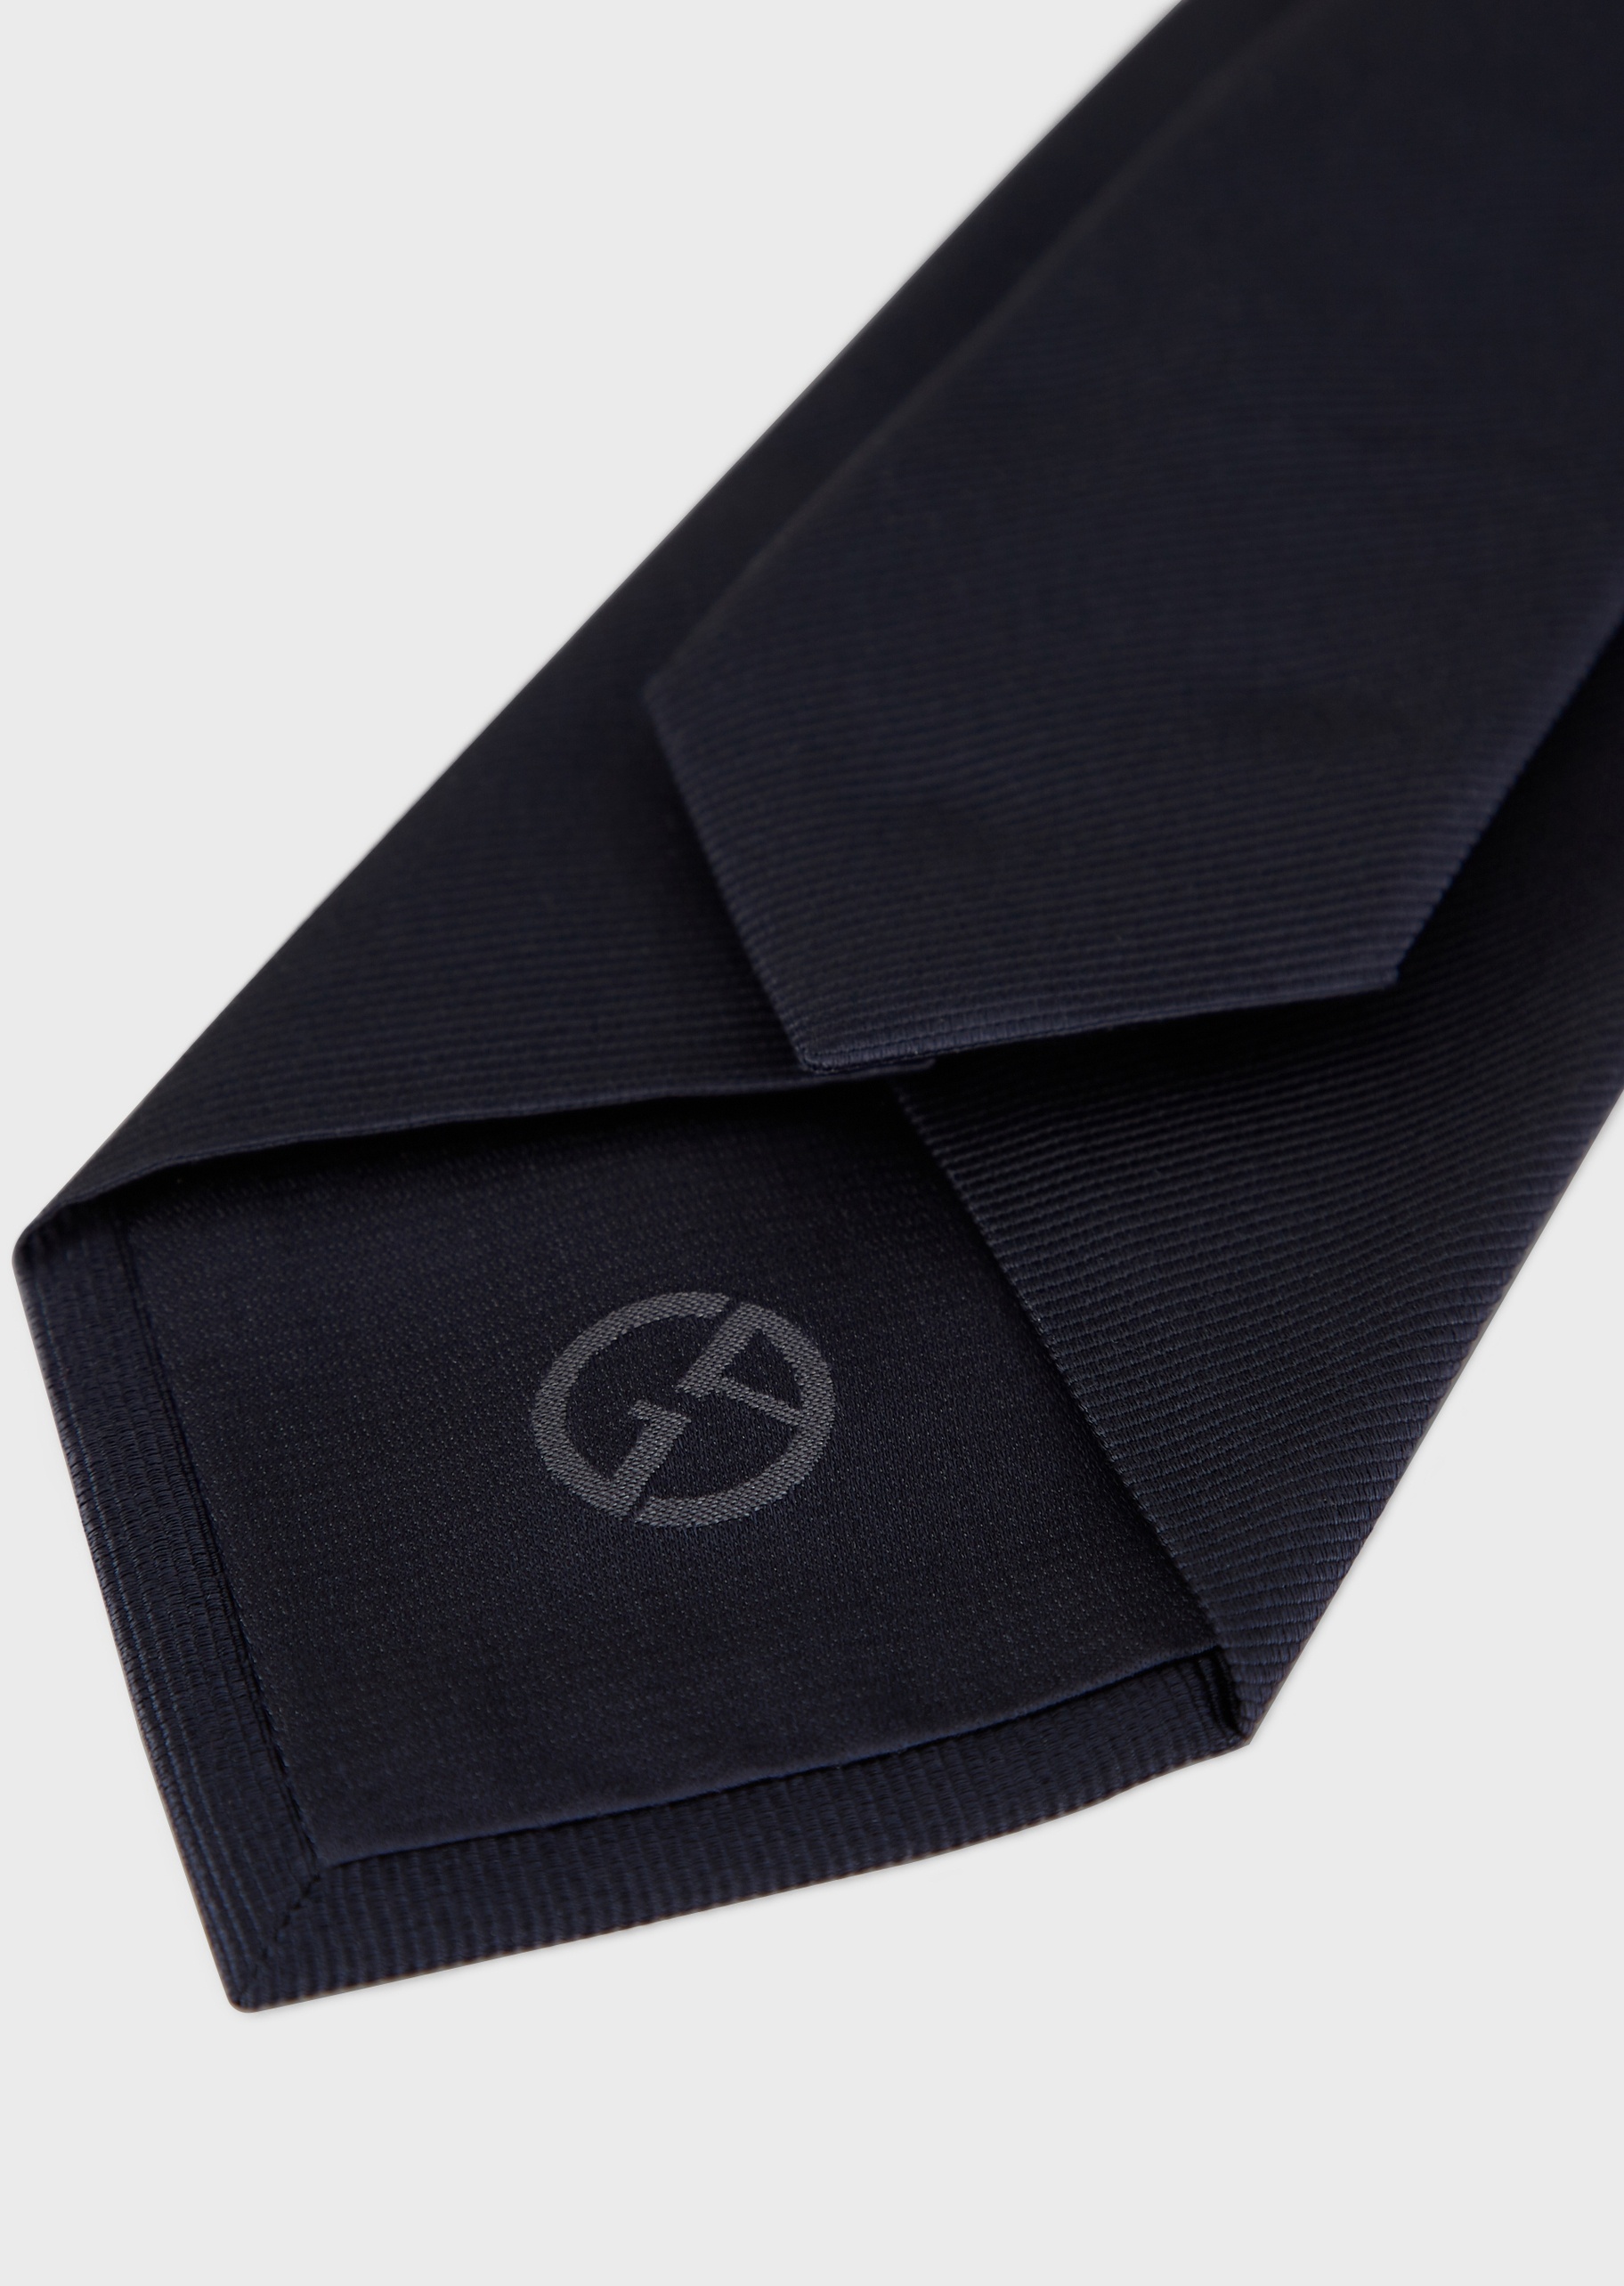 Giorgio Armani 男士桑蚕丝箭头型休闲商务纯色领带